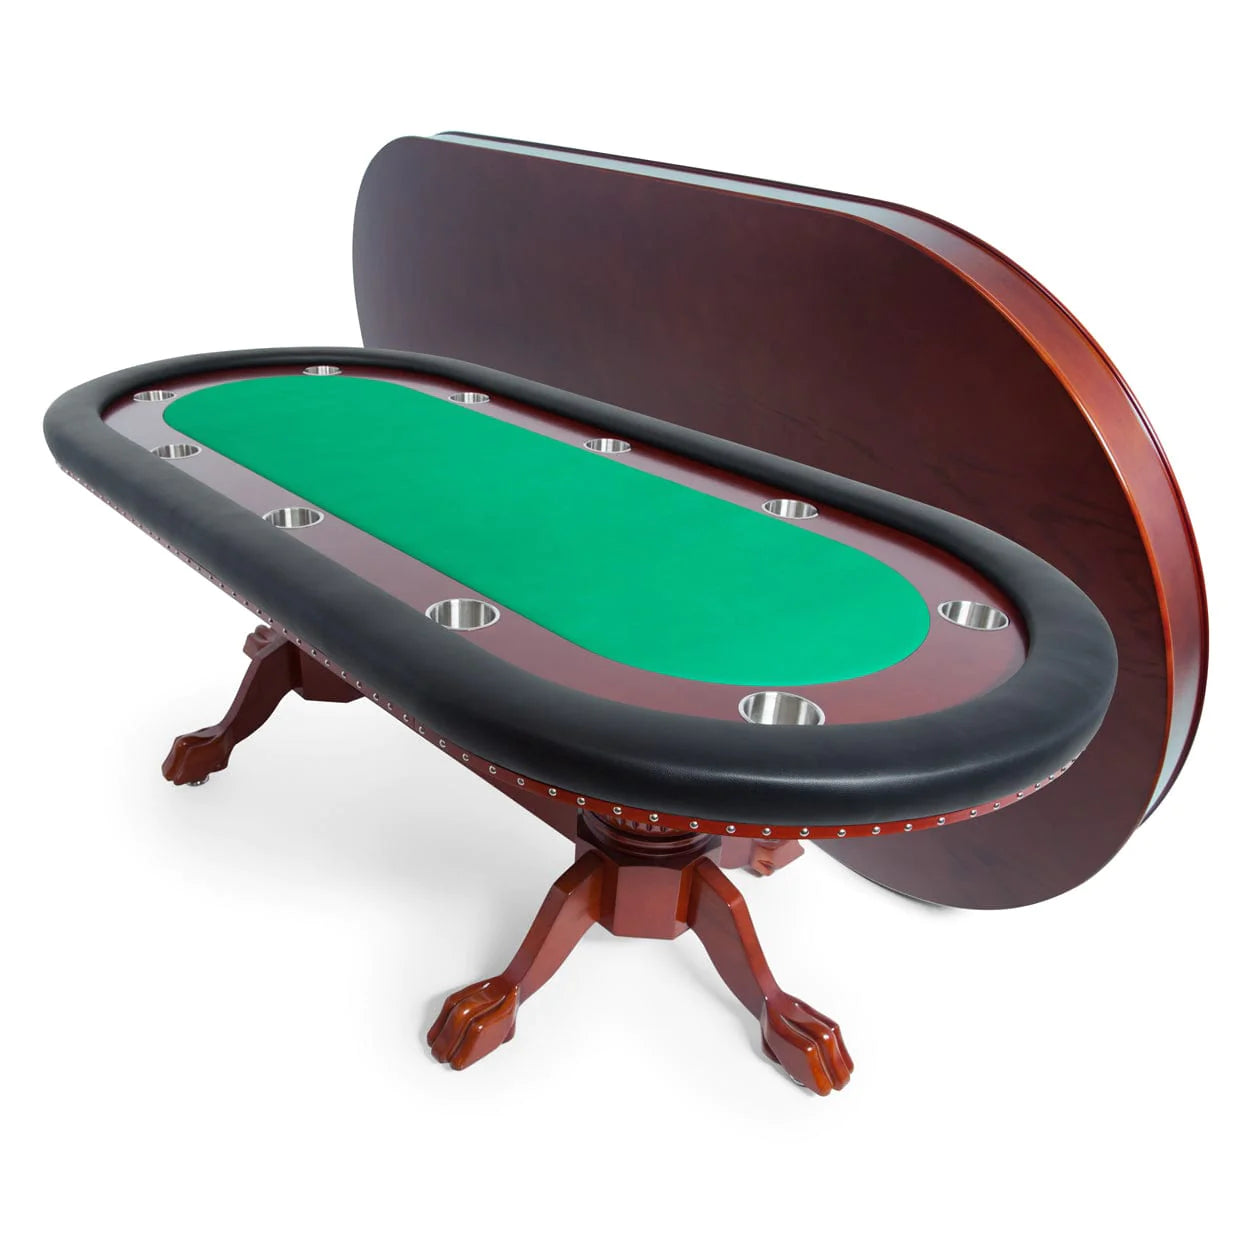 Rockwell 94" Poker Table (Mahogany) in green